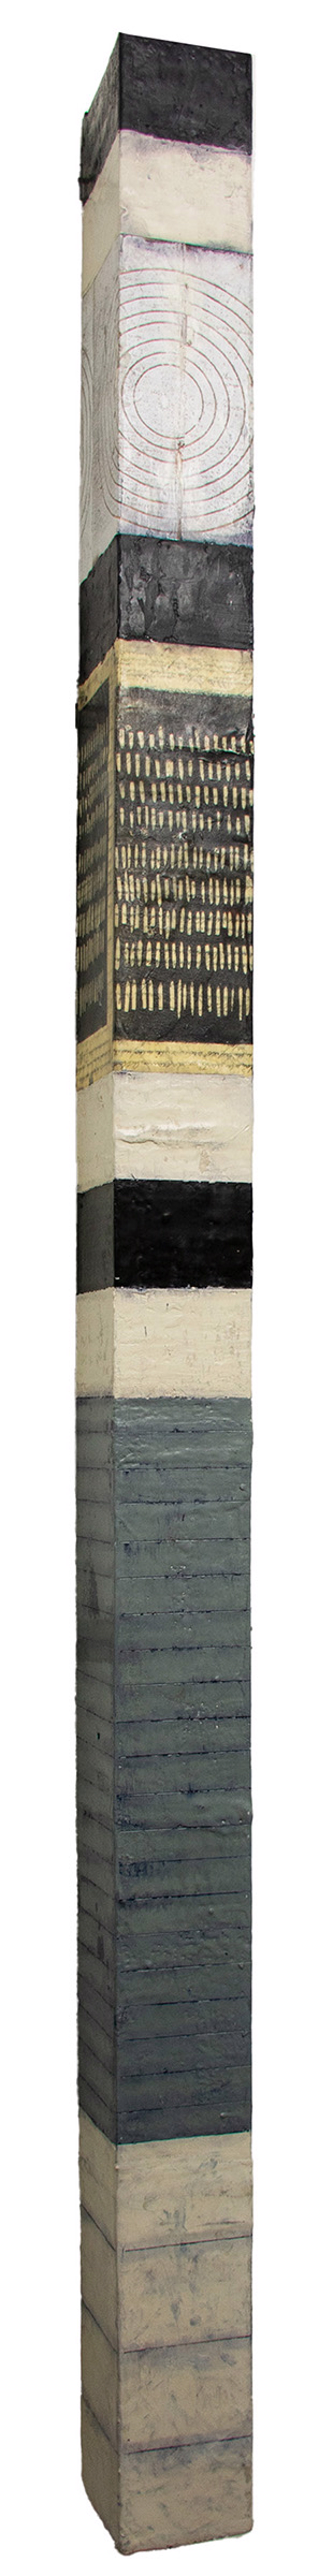 Wall Column, Grey, Black + White by Graceann Warn